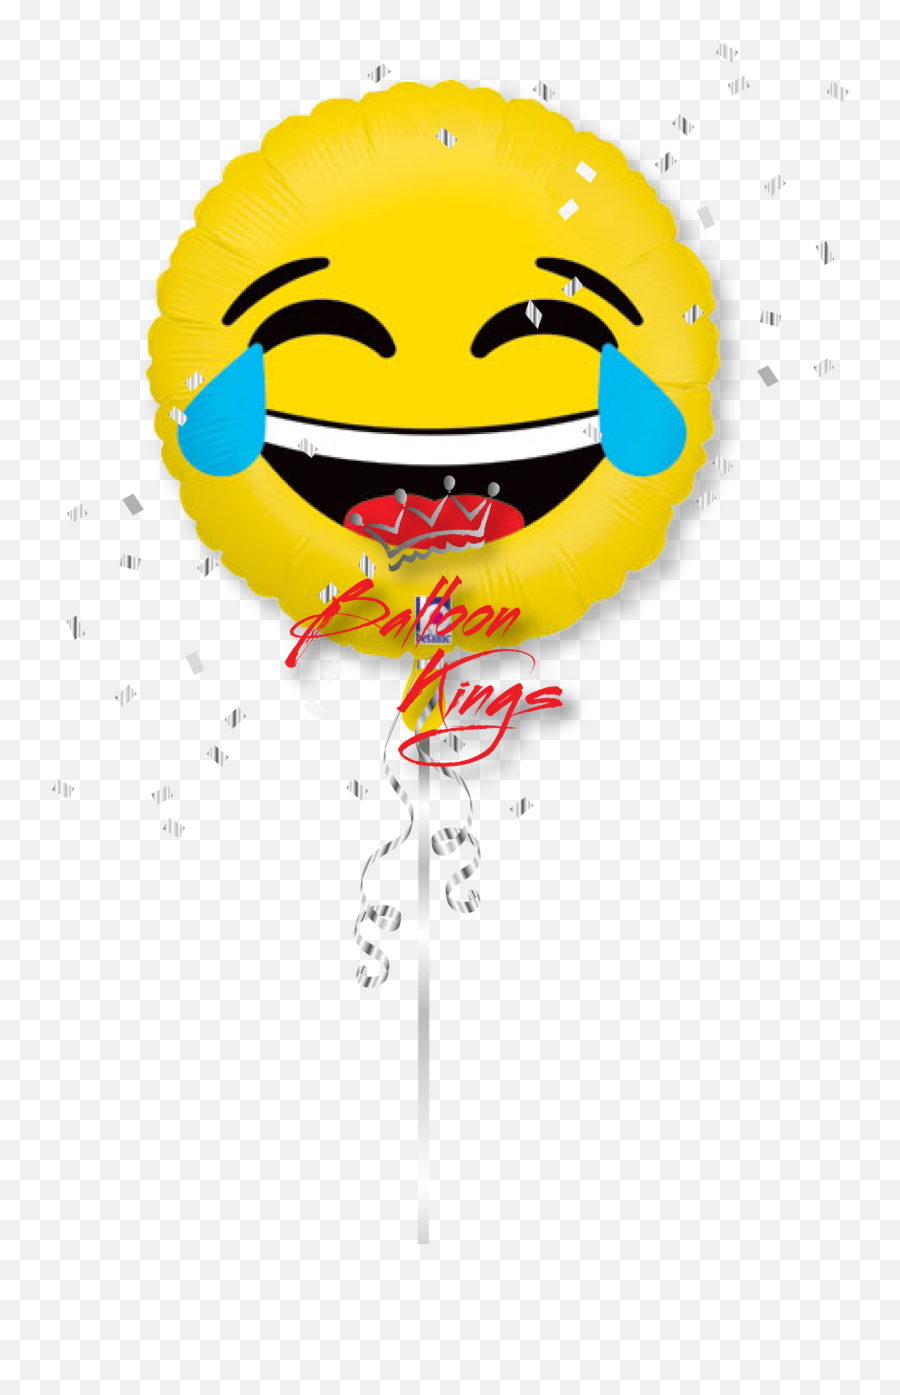 Download Emoji Lol Balloon Kings - Laugh Cry Emoji,Emoji Balloons